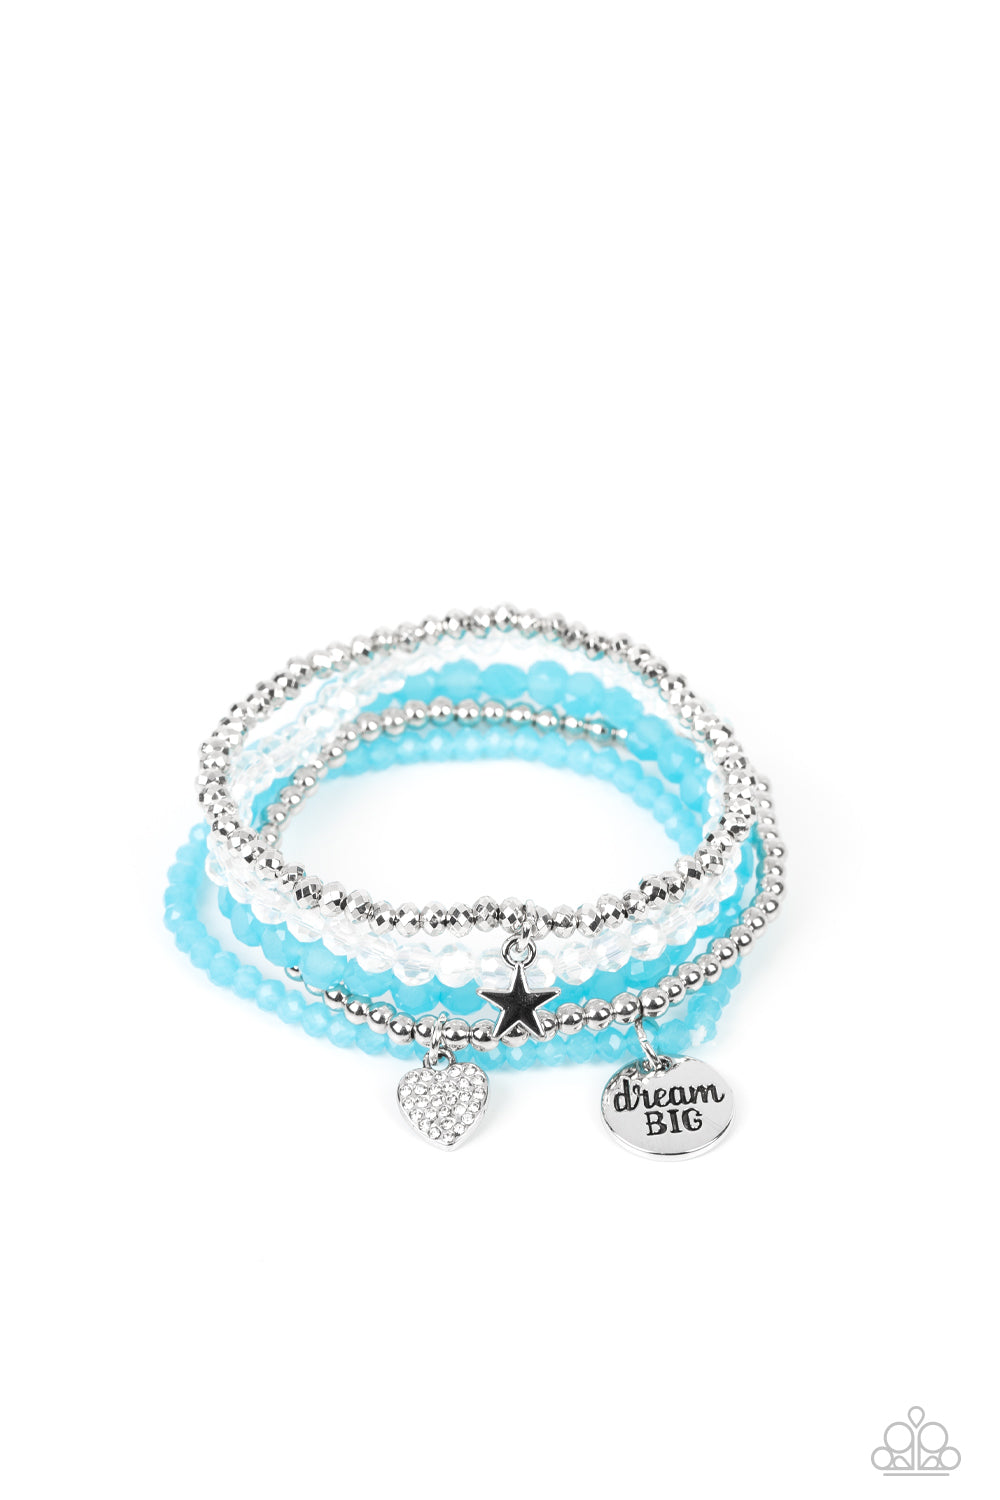 Teenage DREAMER - Blue, Silver, & White Beads, "Dream Big" Charm, Star Charm, & Heart Charm Paparazzi Stretch Bracelet